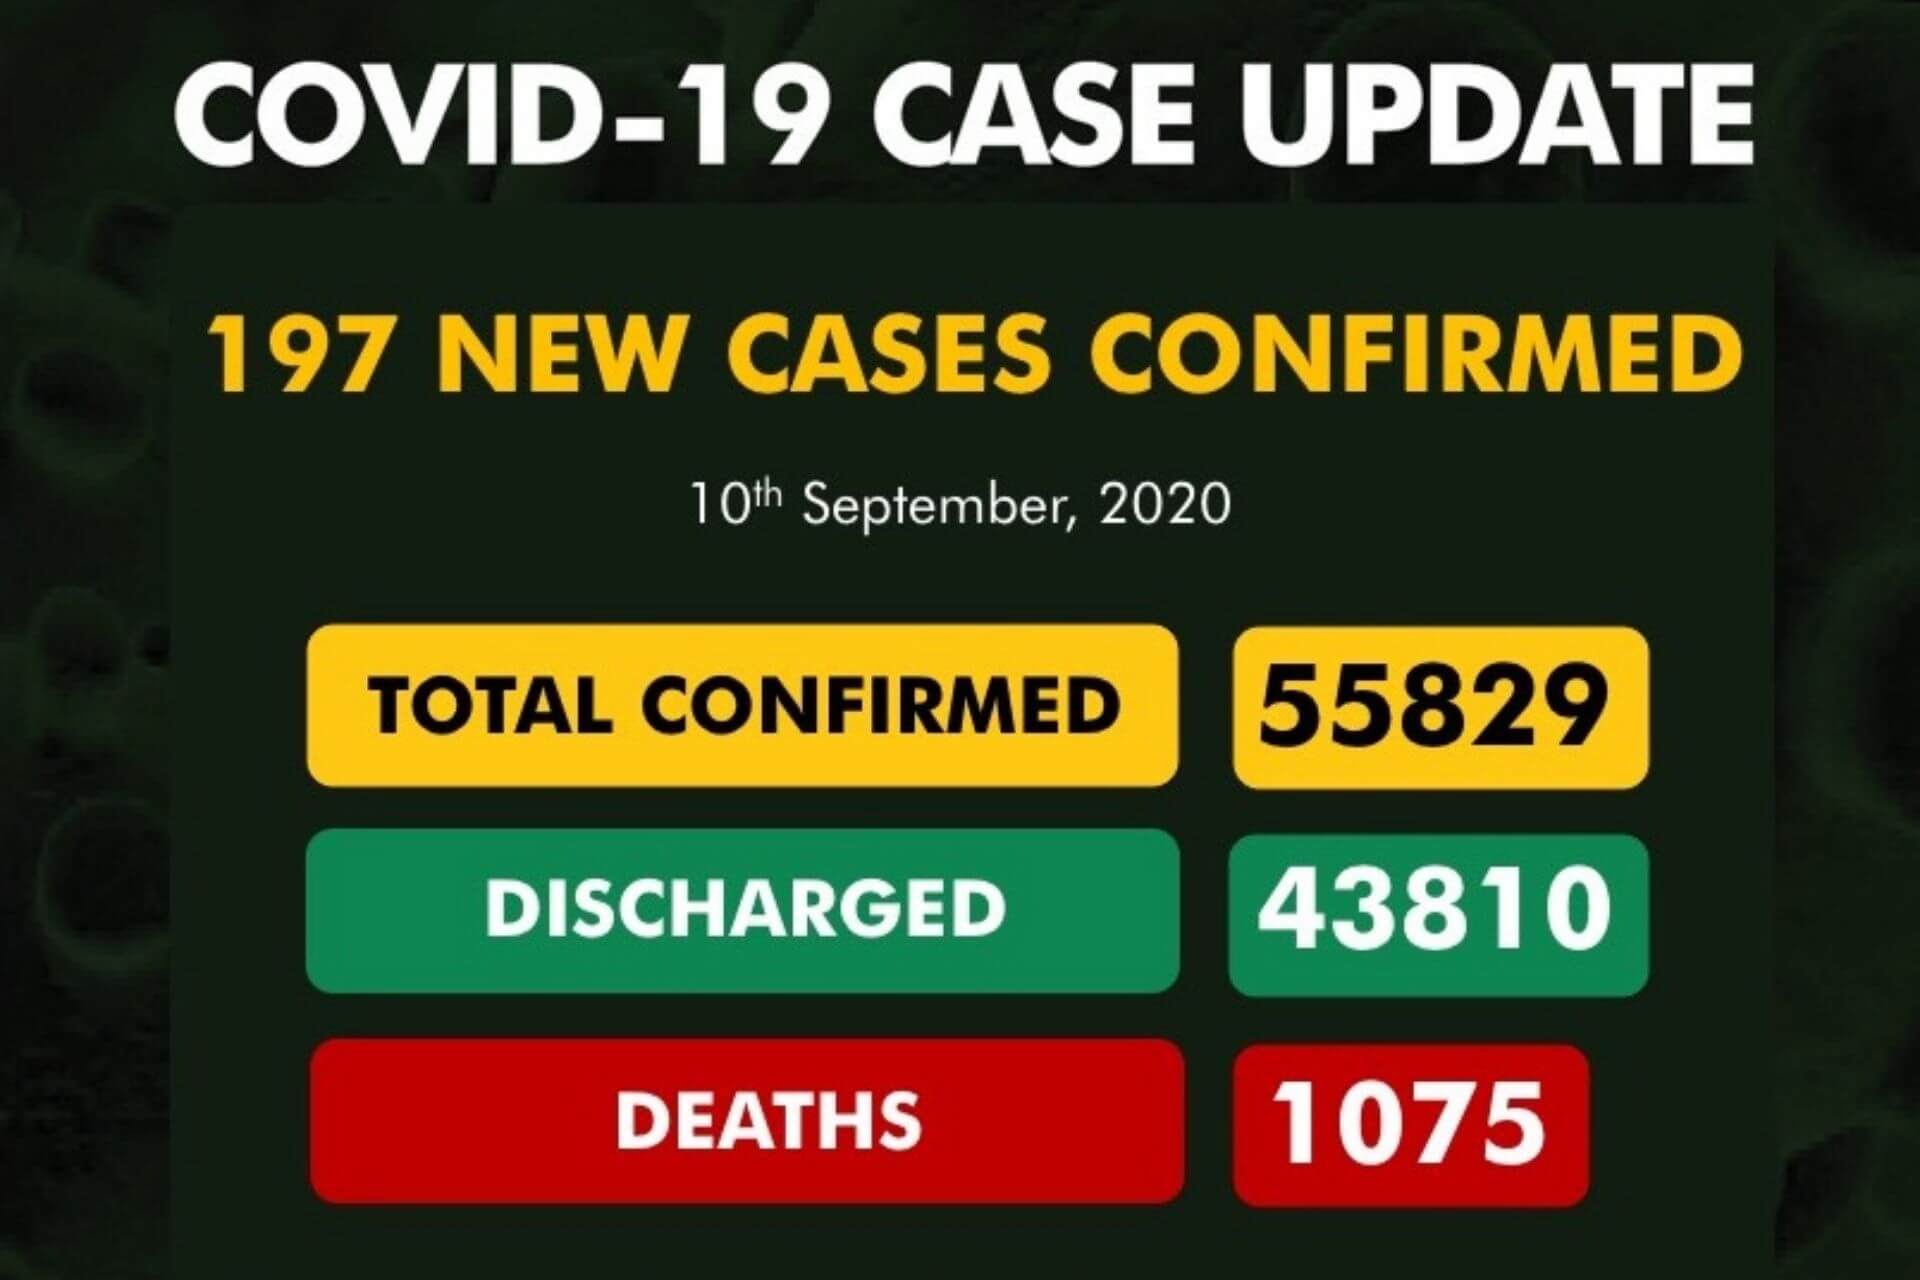 Coronavirus Nigeria update: 197 new cases of COVID-19 confirmed in Nigeria